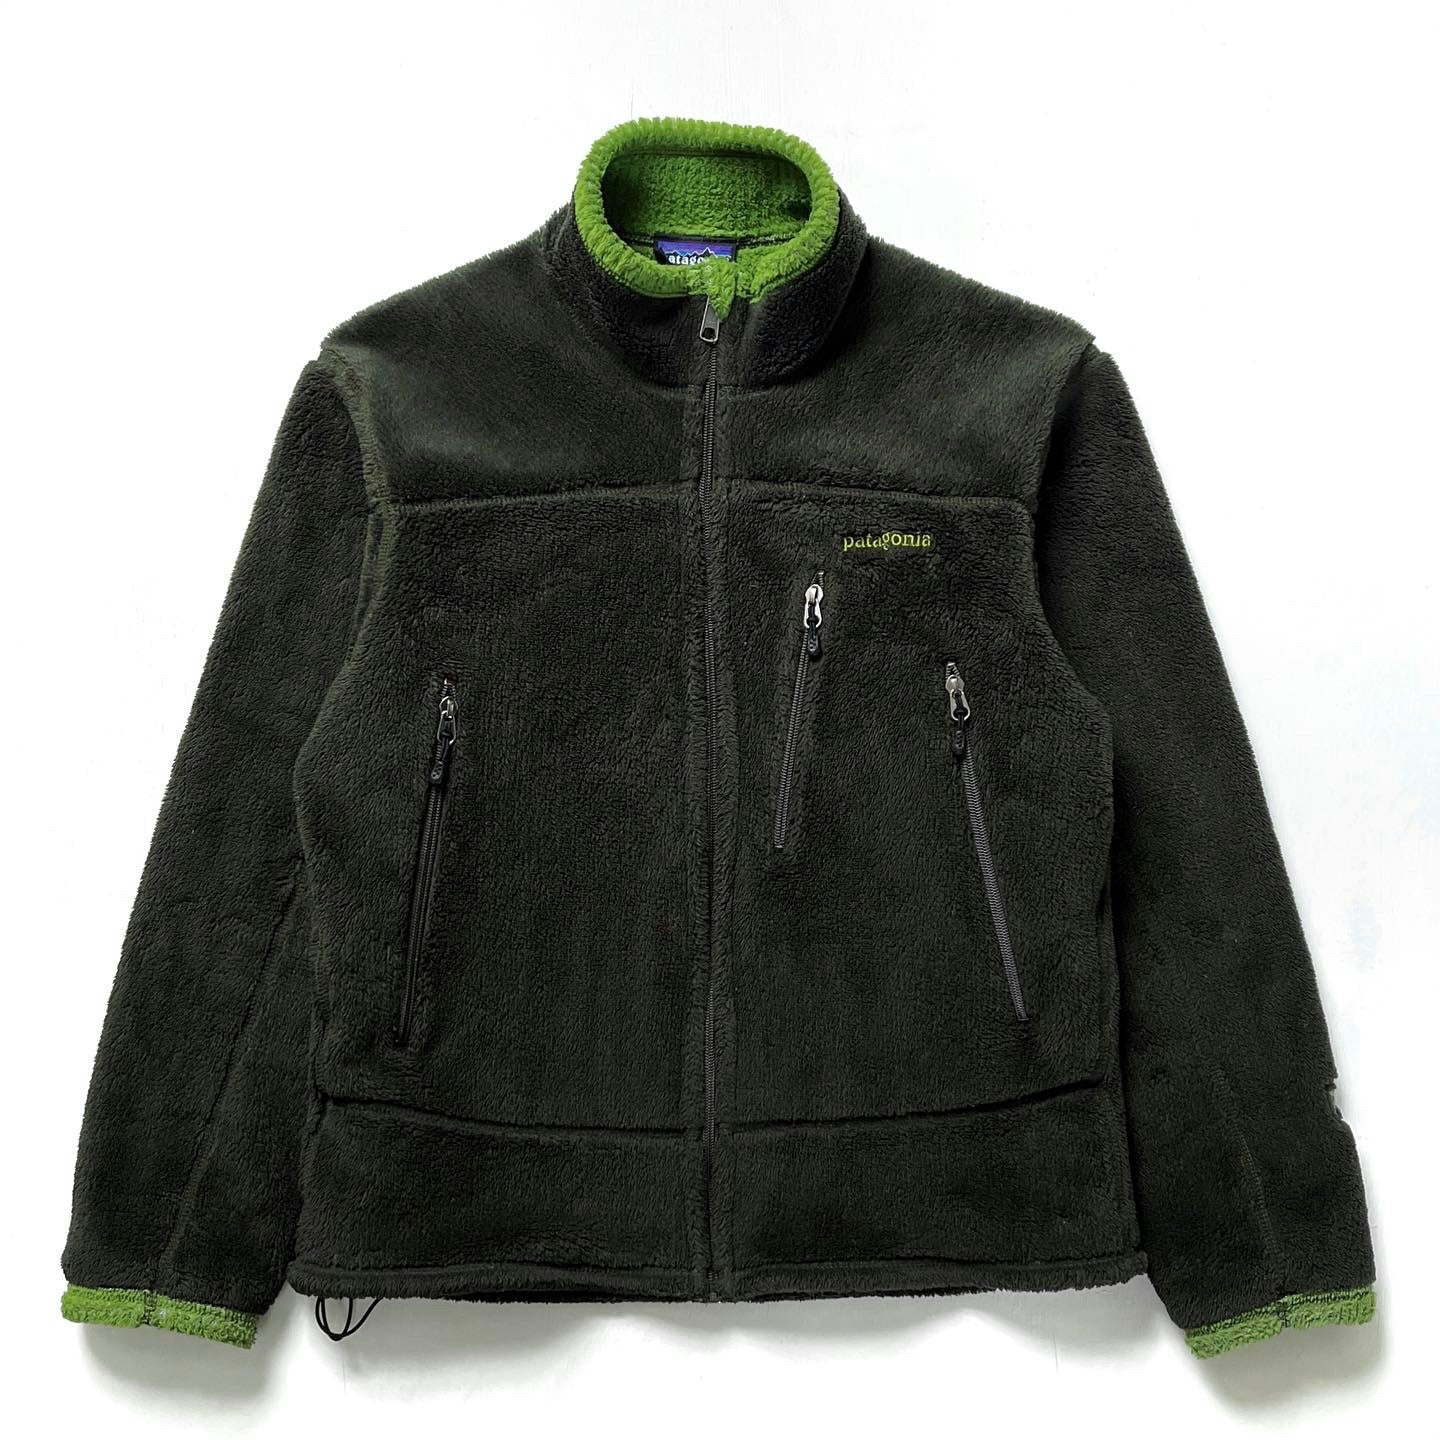 2004 Patagonia Mens R4 Regulator Fleece Jacket, Loden (S)